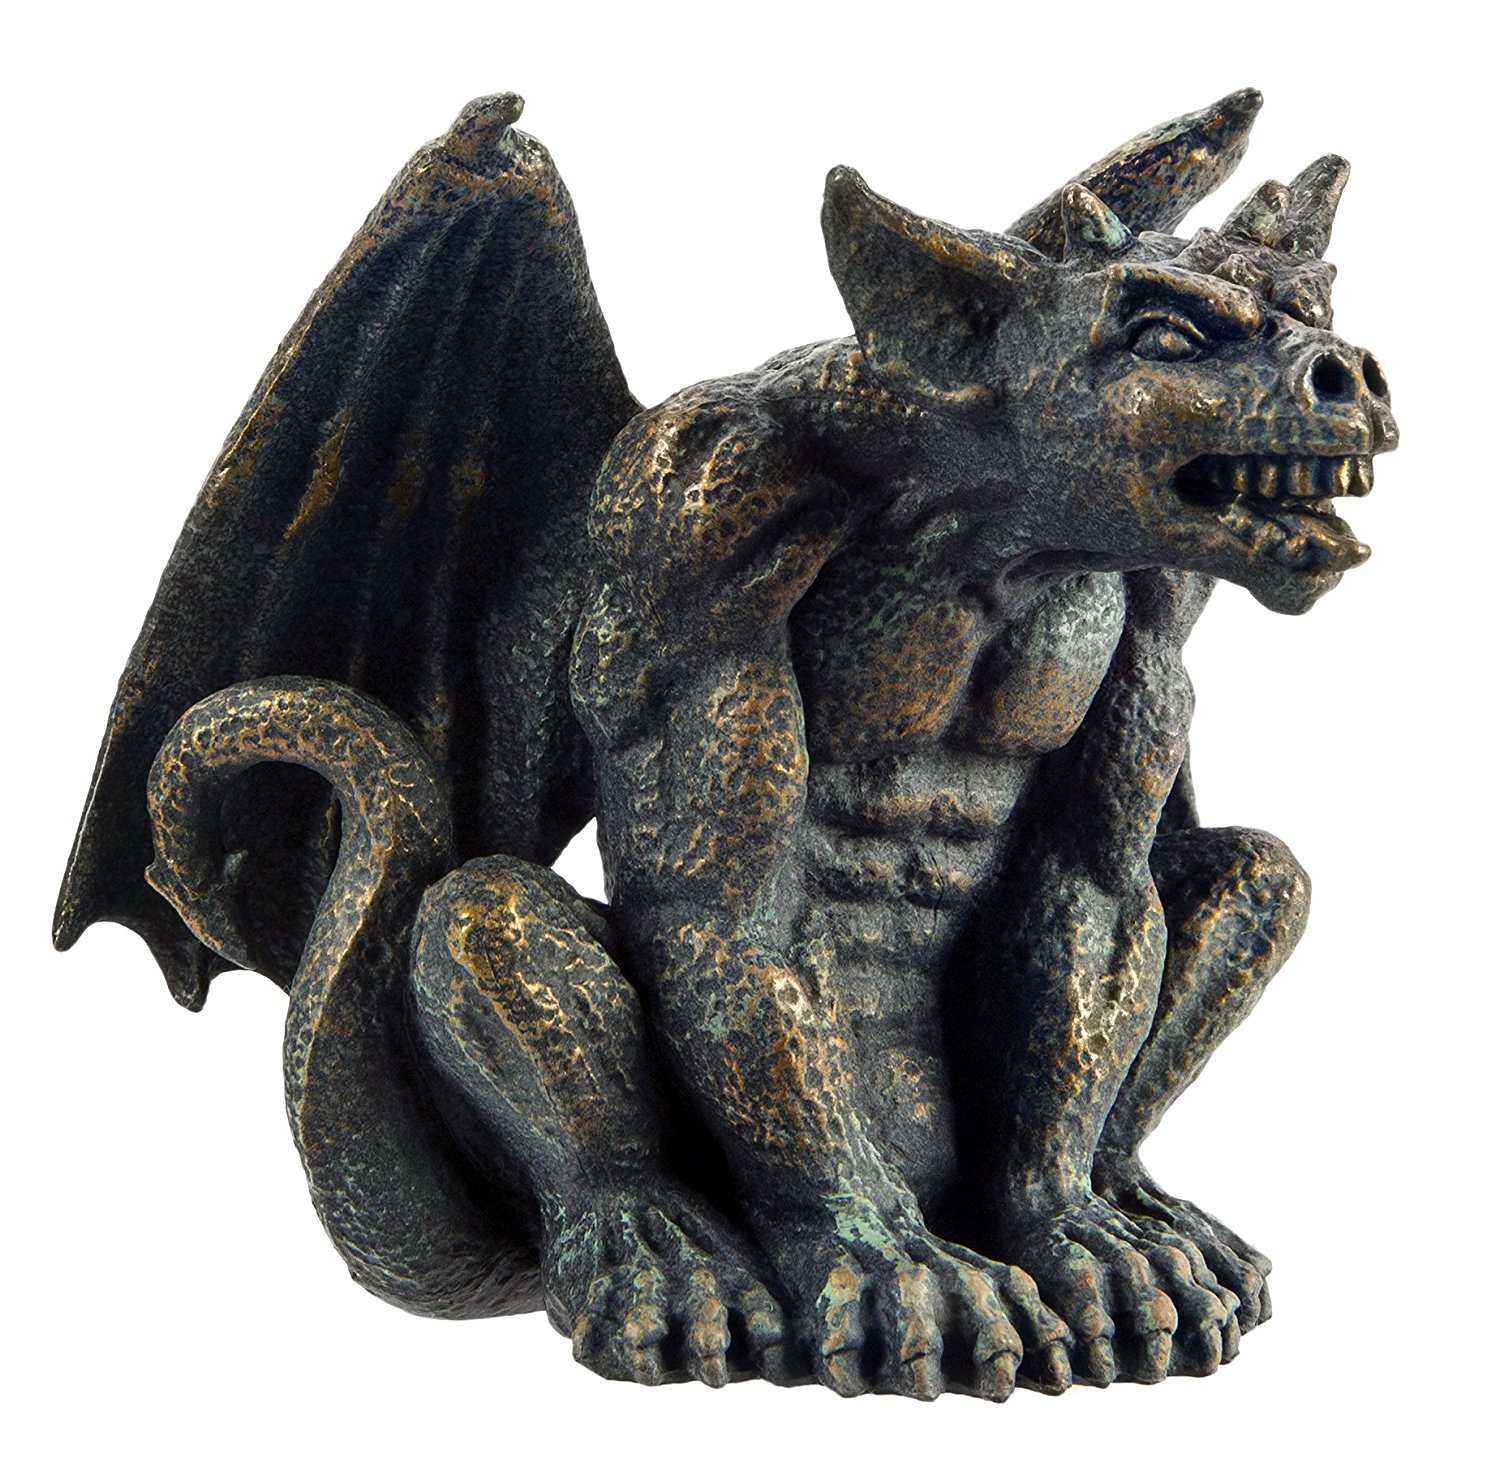 Amazon.com: Safari Ltd Mythical Realms Gargoyle: Toys & Games